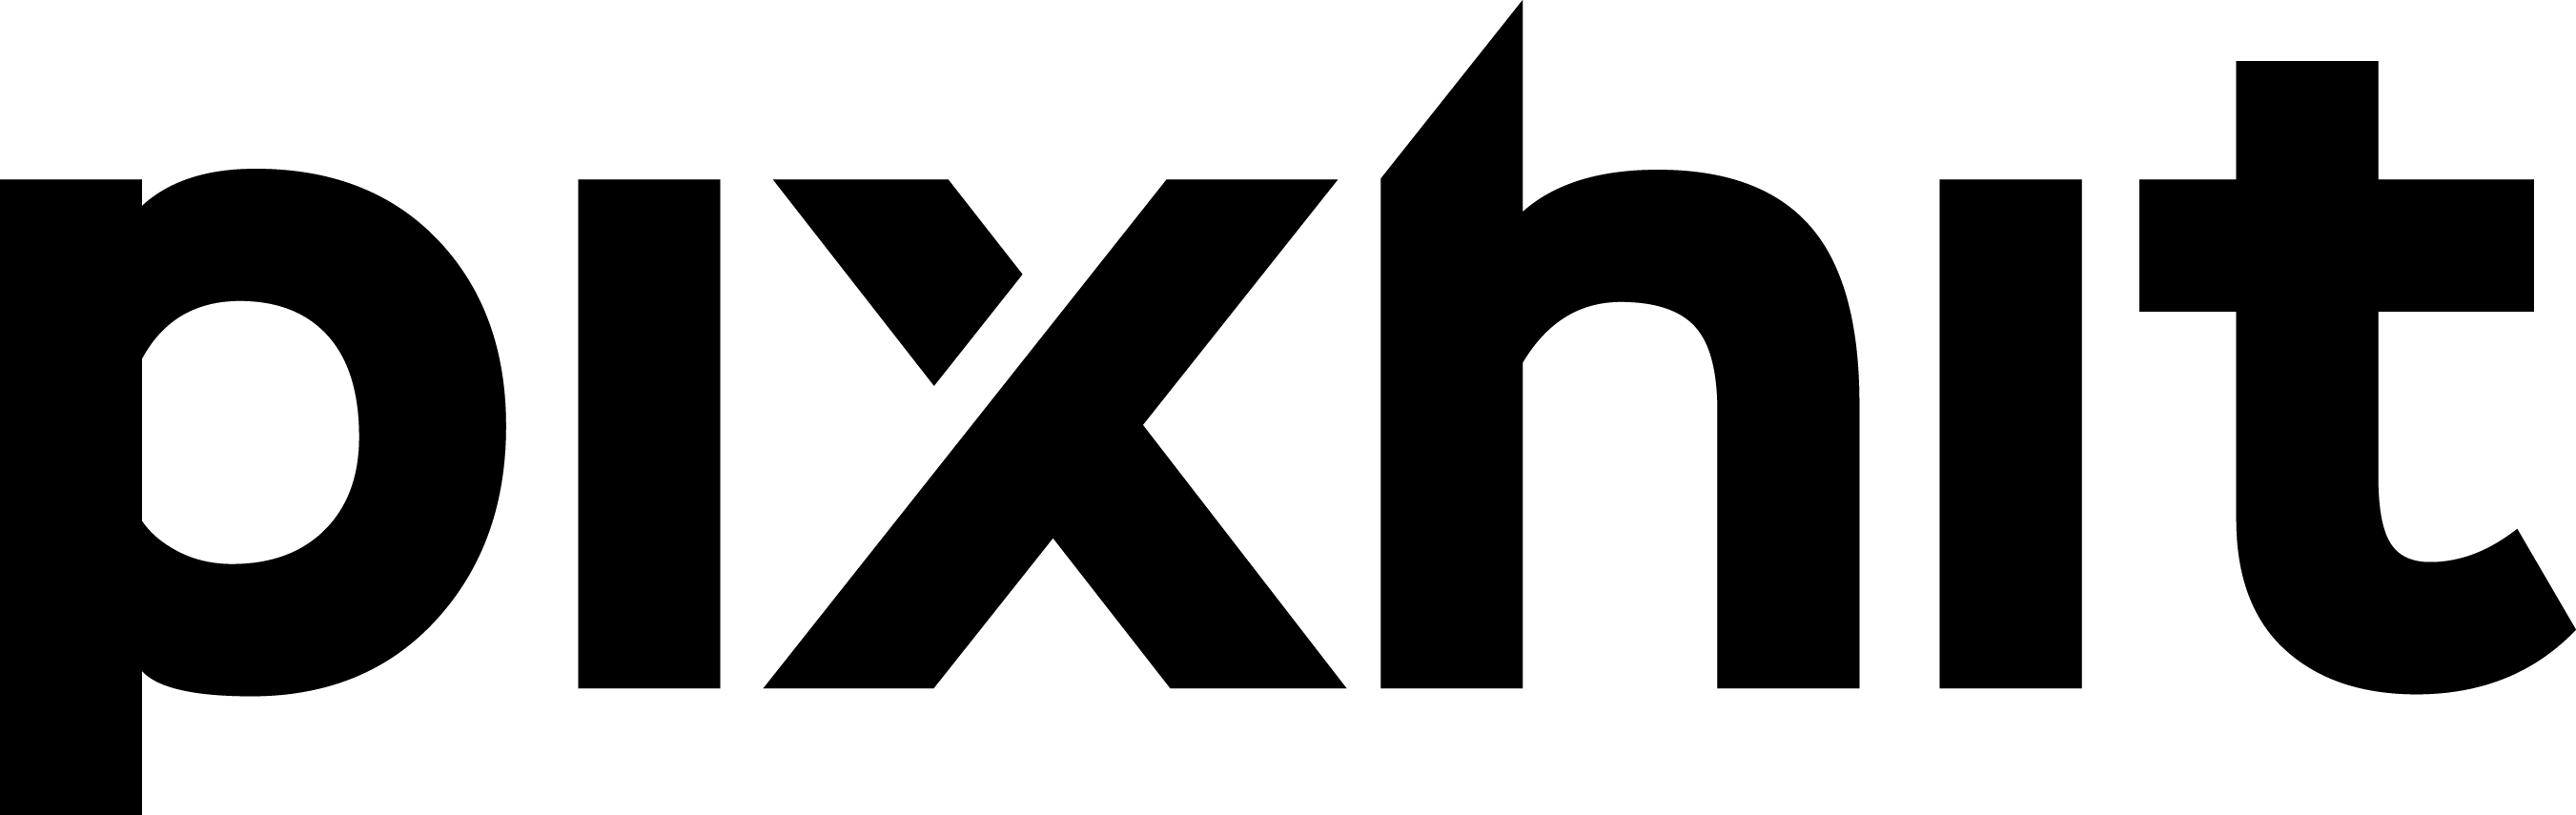 logo_pixhit_black